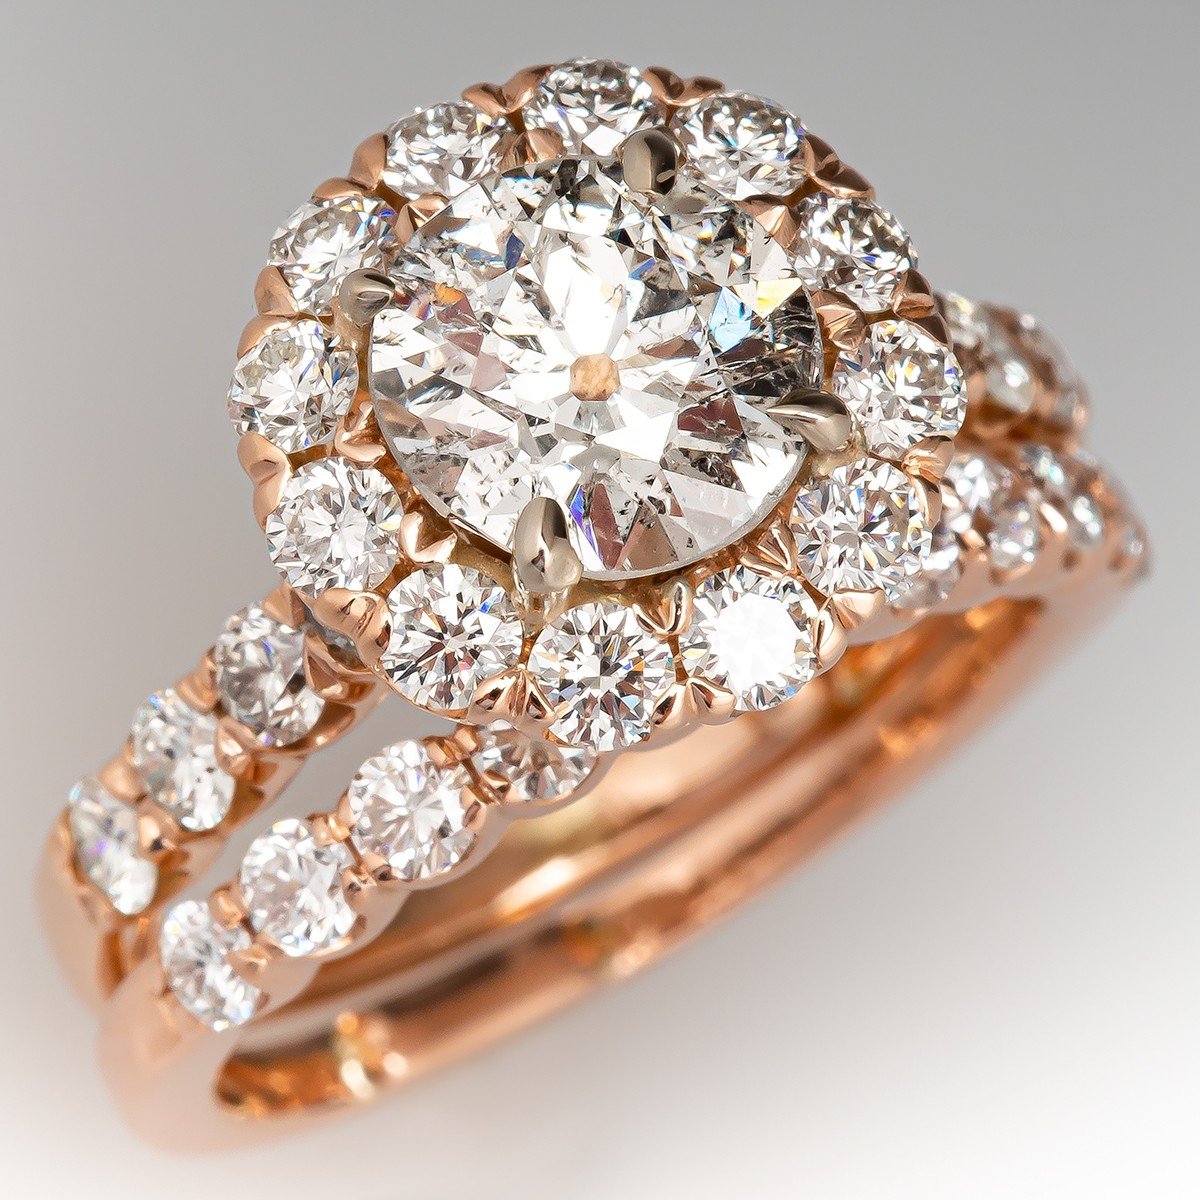 Blue Diamond Women's Ring Beautiful Earth Minded 20 Ct Certifiy Cut High  Polish | eBay